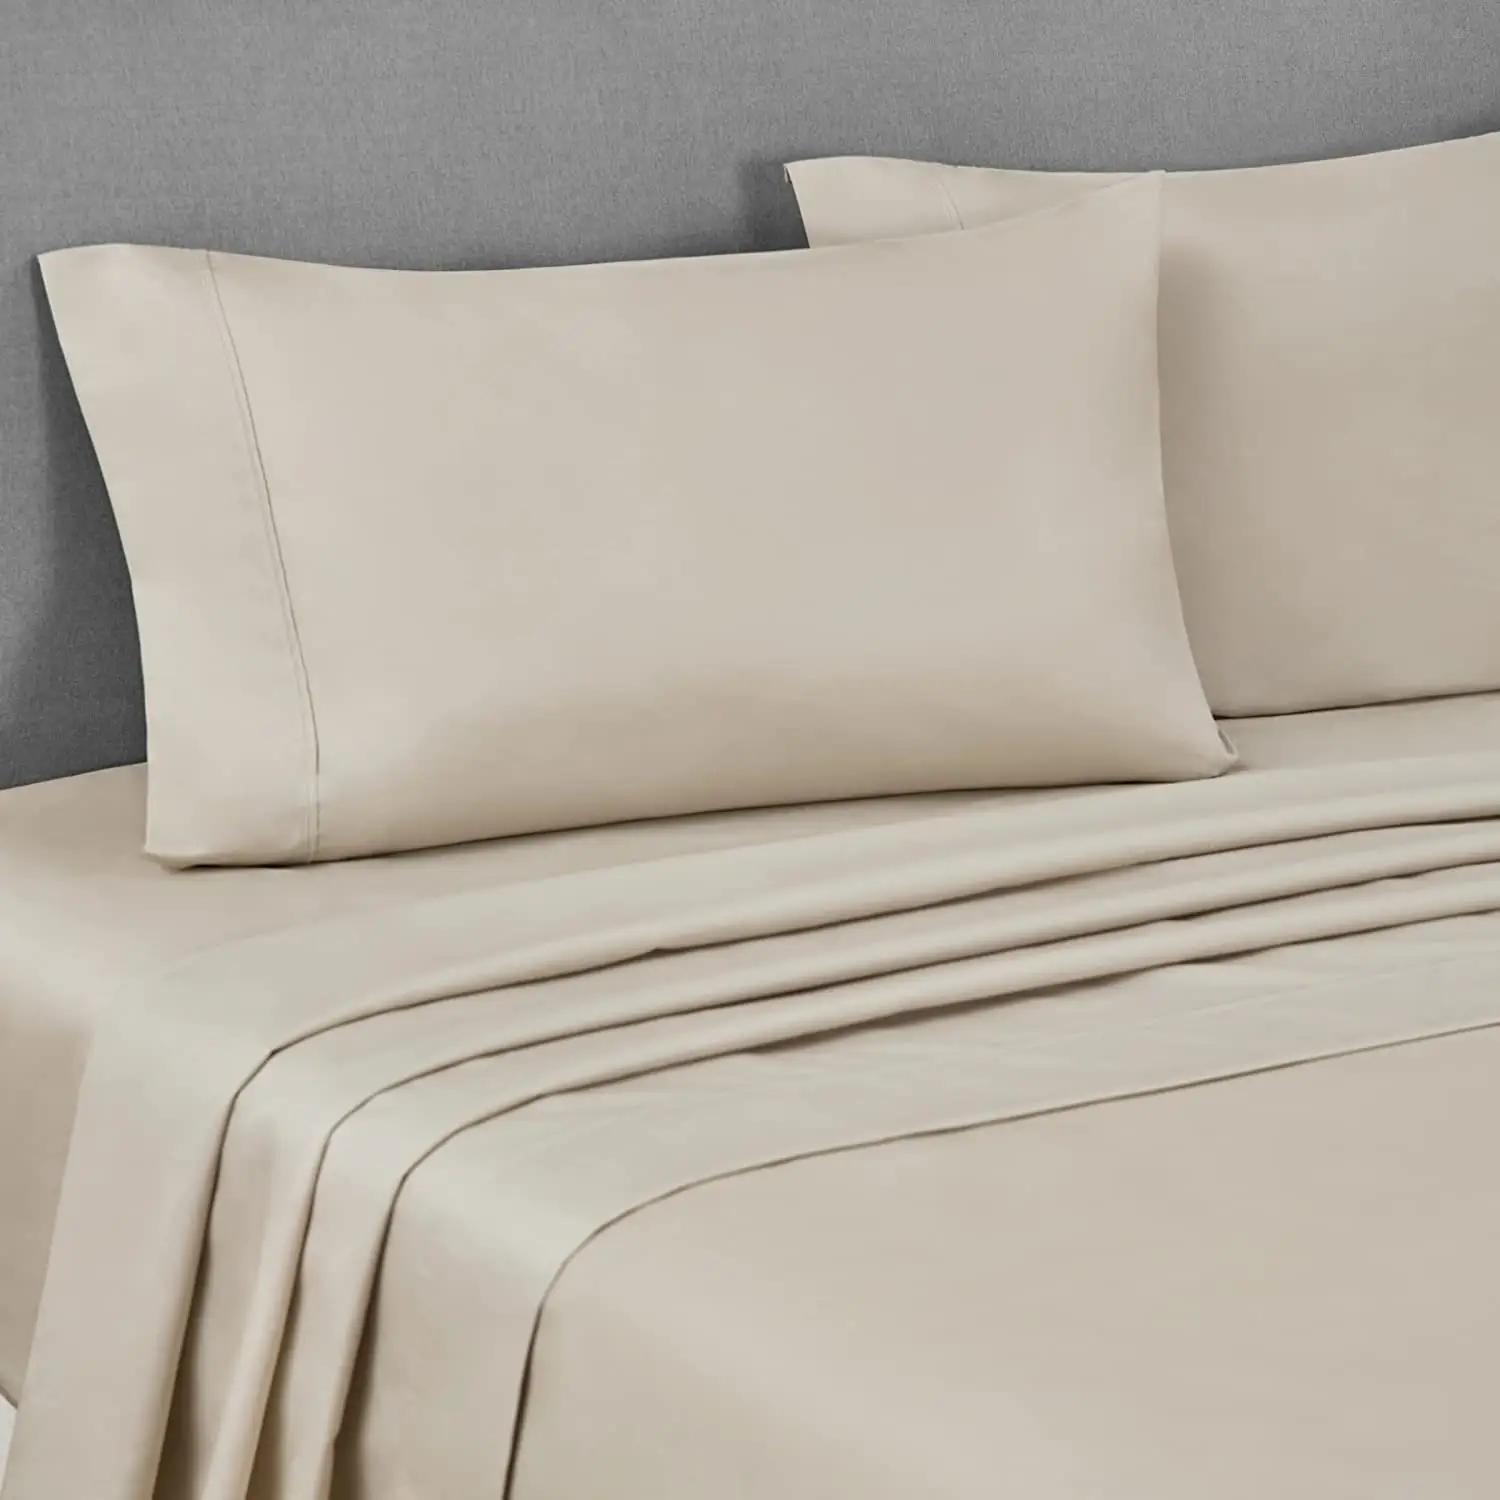 Hot Sale High Quality 100% Cotton bedset bedding duvet quilt premium bedding set covers bedsheets